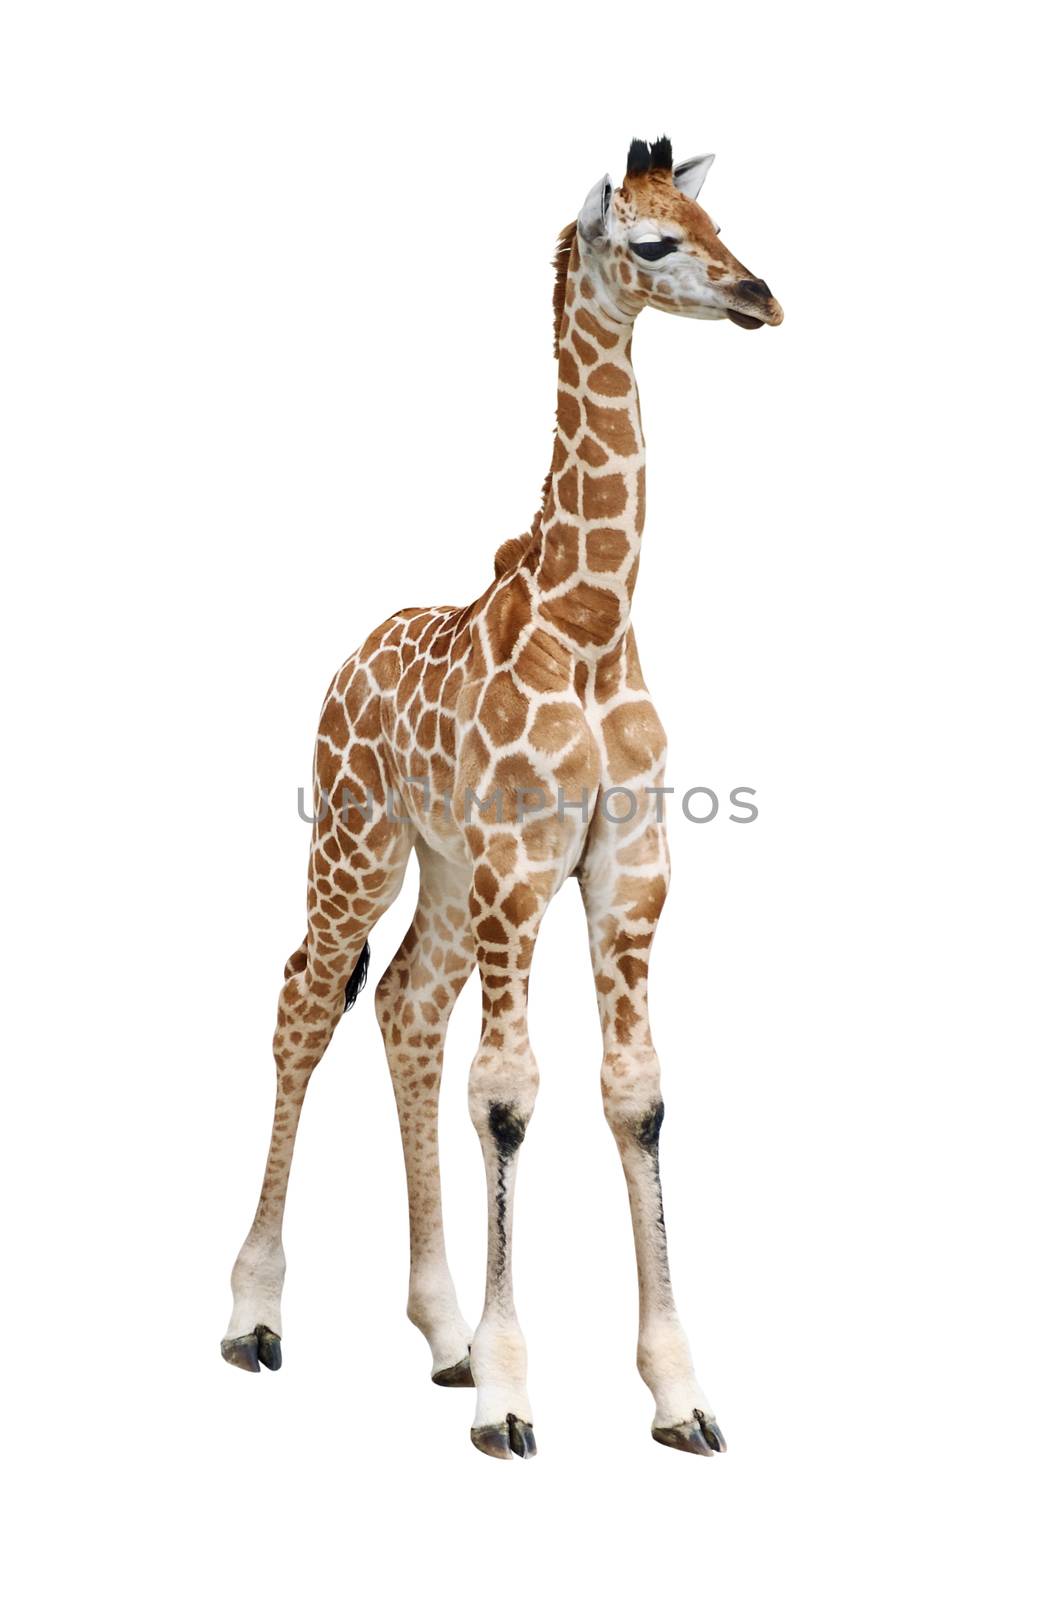 Giraffe calf on white by vkstudio